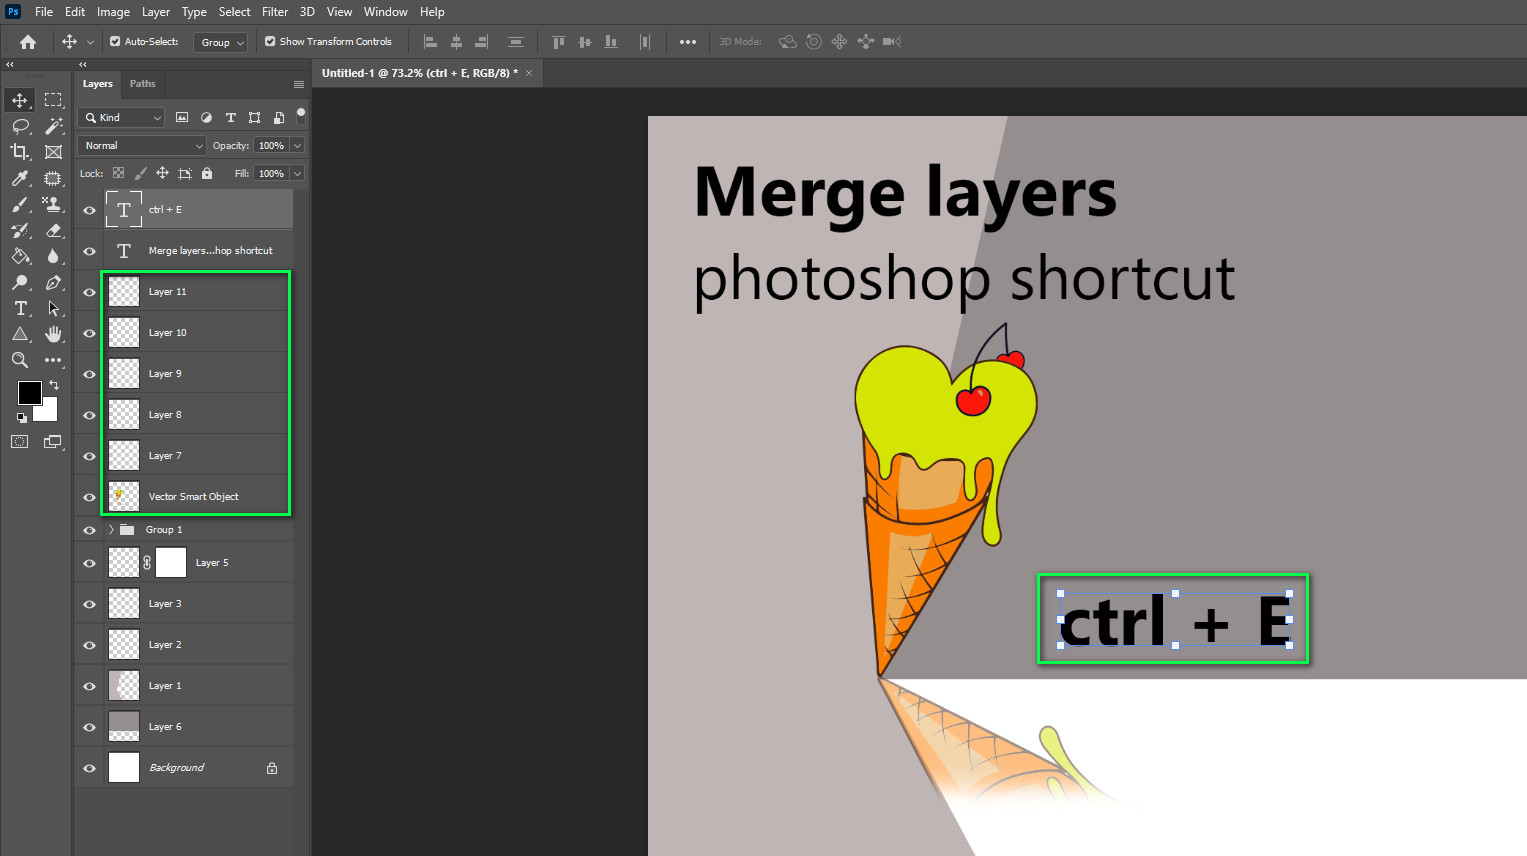 Merge layers photoshop shortcut